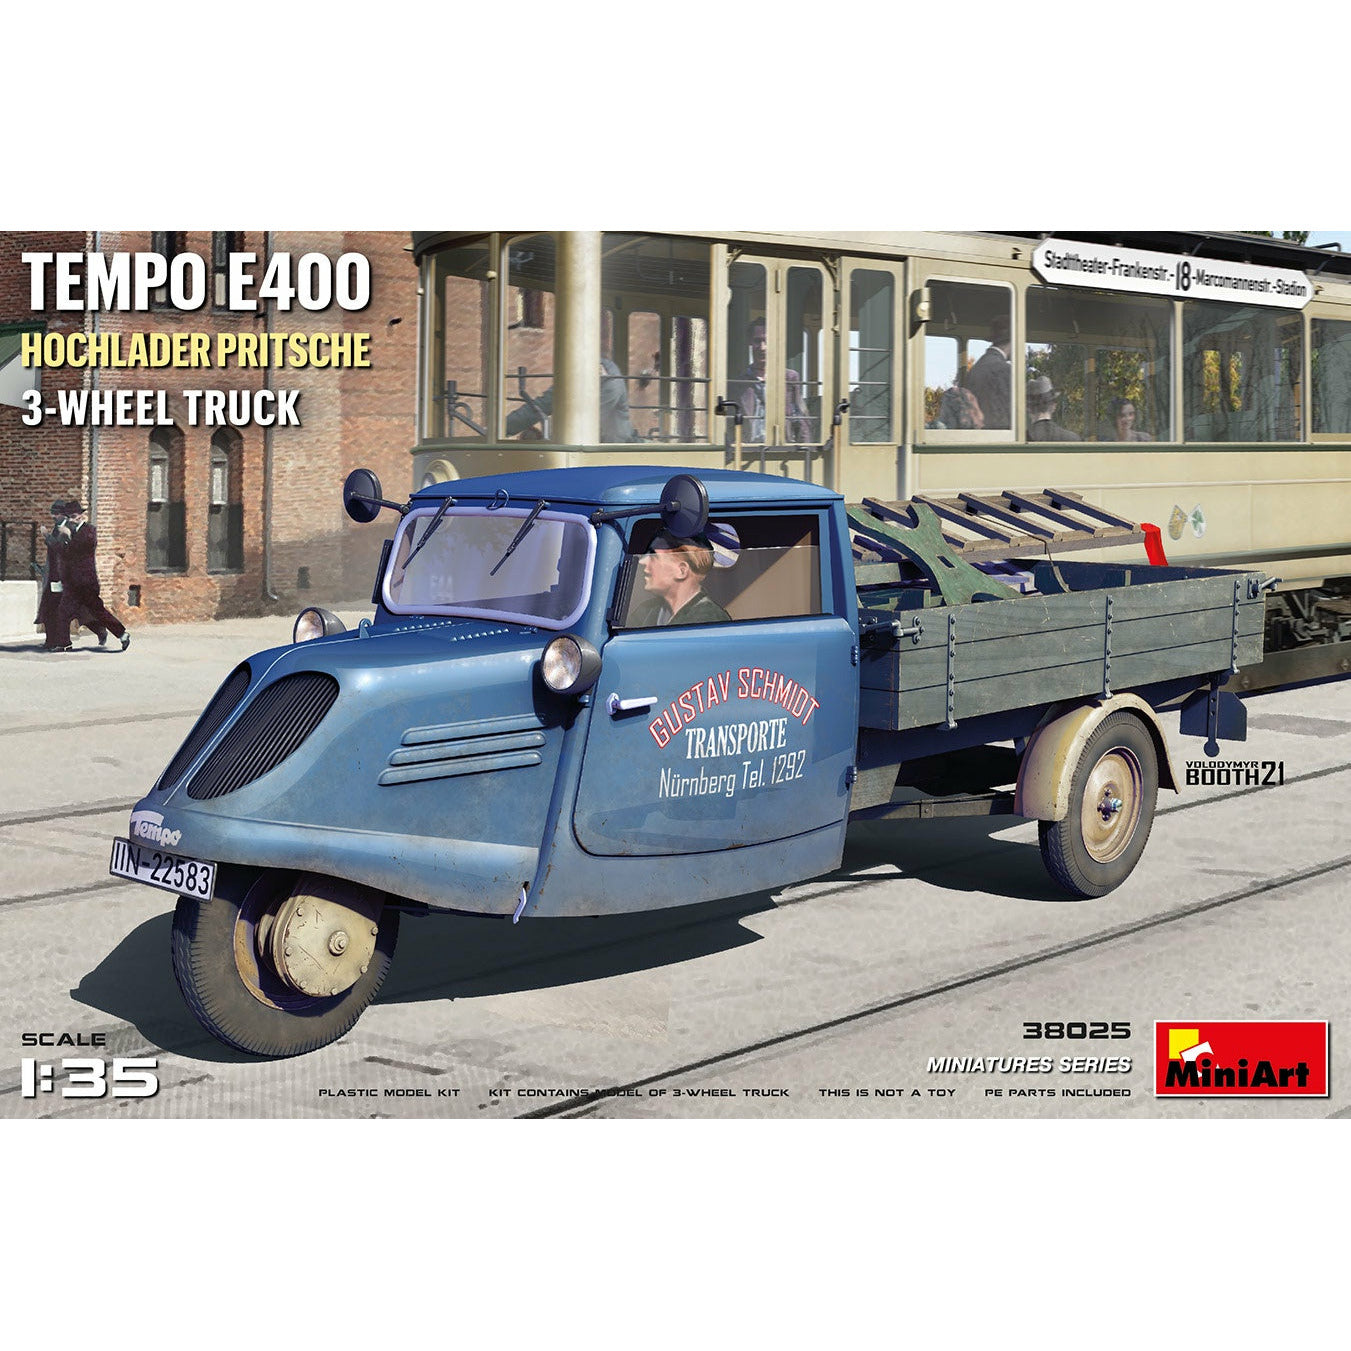 Tempo E400 Hochlader Pritsche 3-Wheel Truck 1/35 #38025 by Miniart